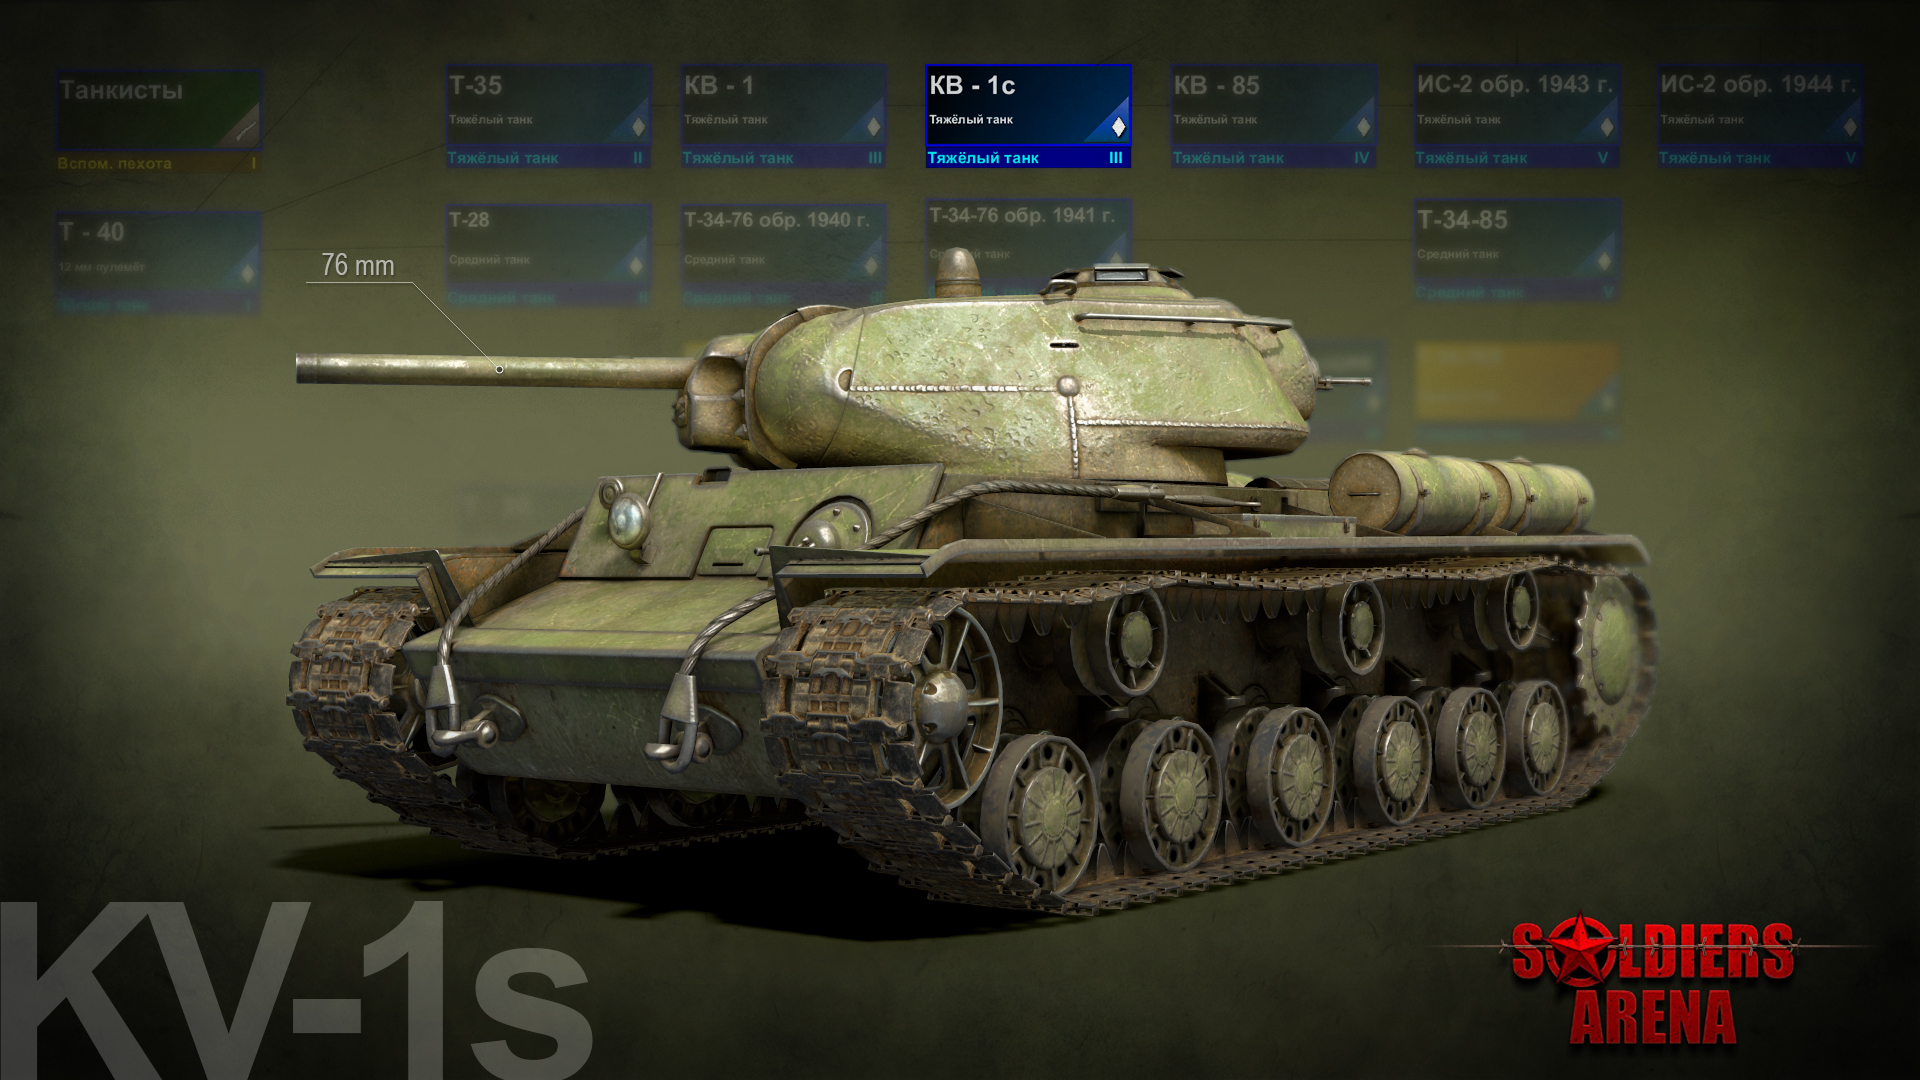 World of Tanks - Soviet premium tank K-2 - full preliminary stats